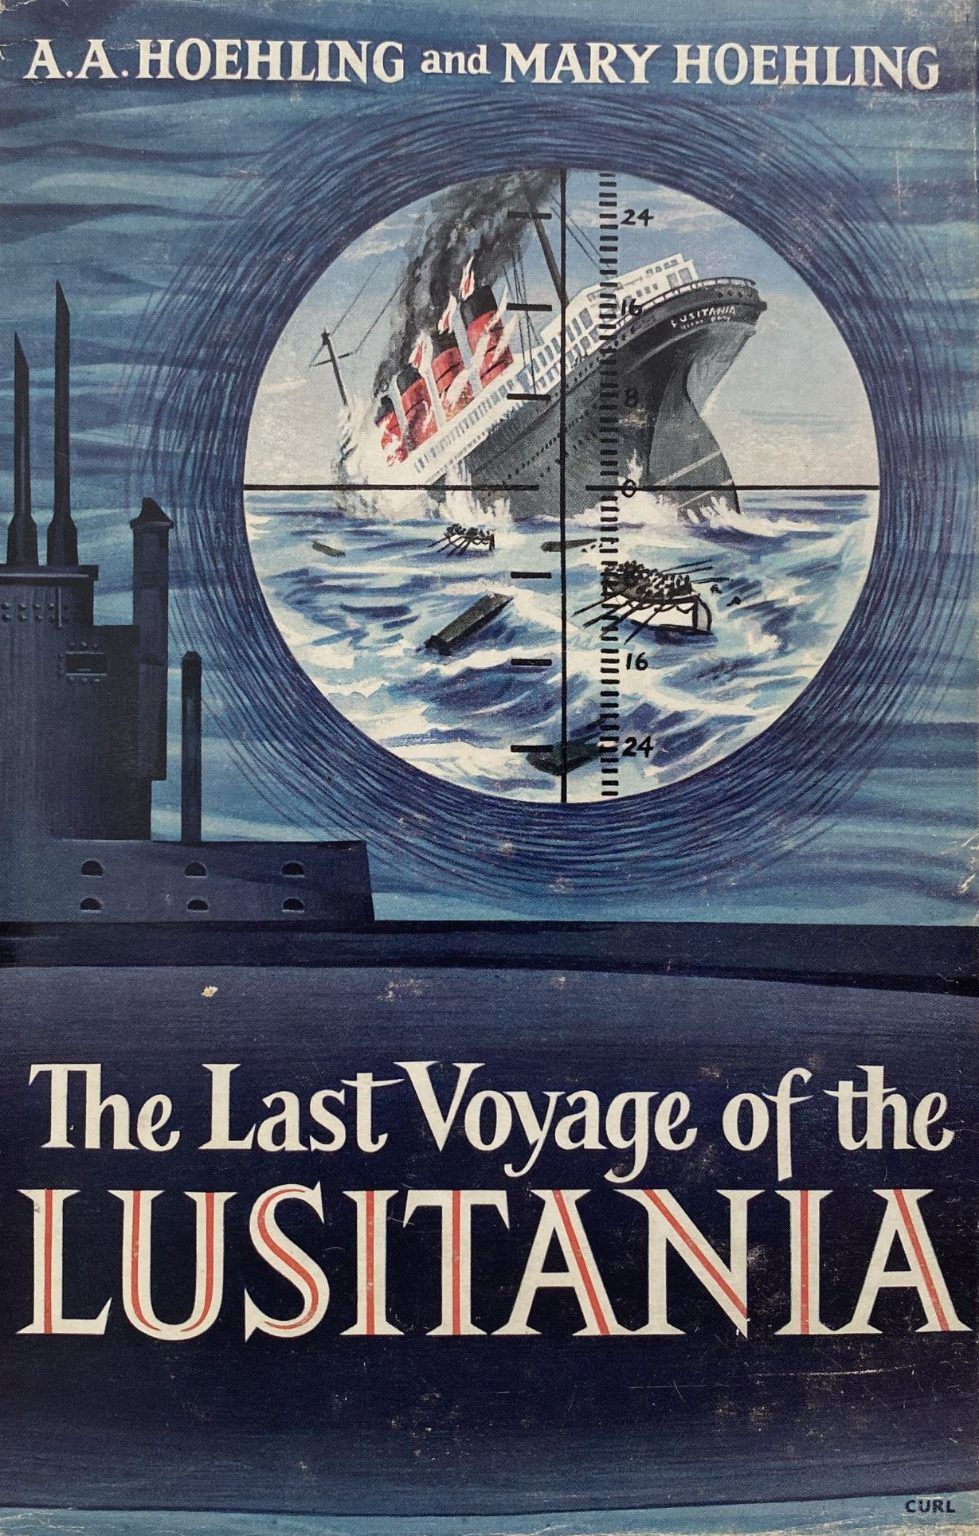 THE LAST VOYAGE OF THE LUSITANIA